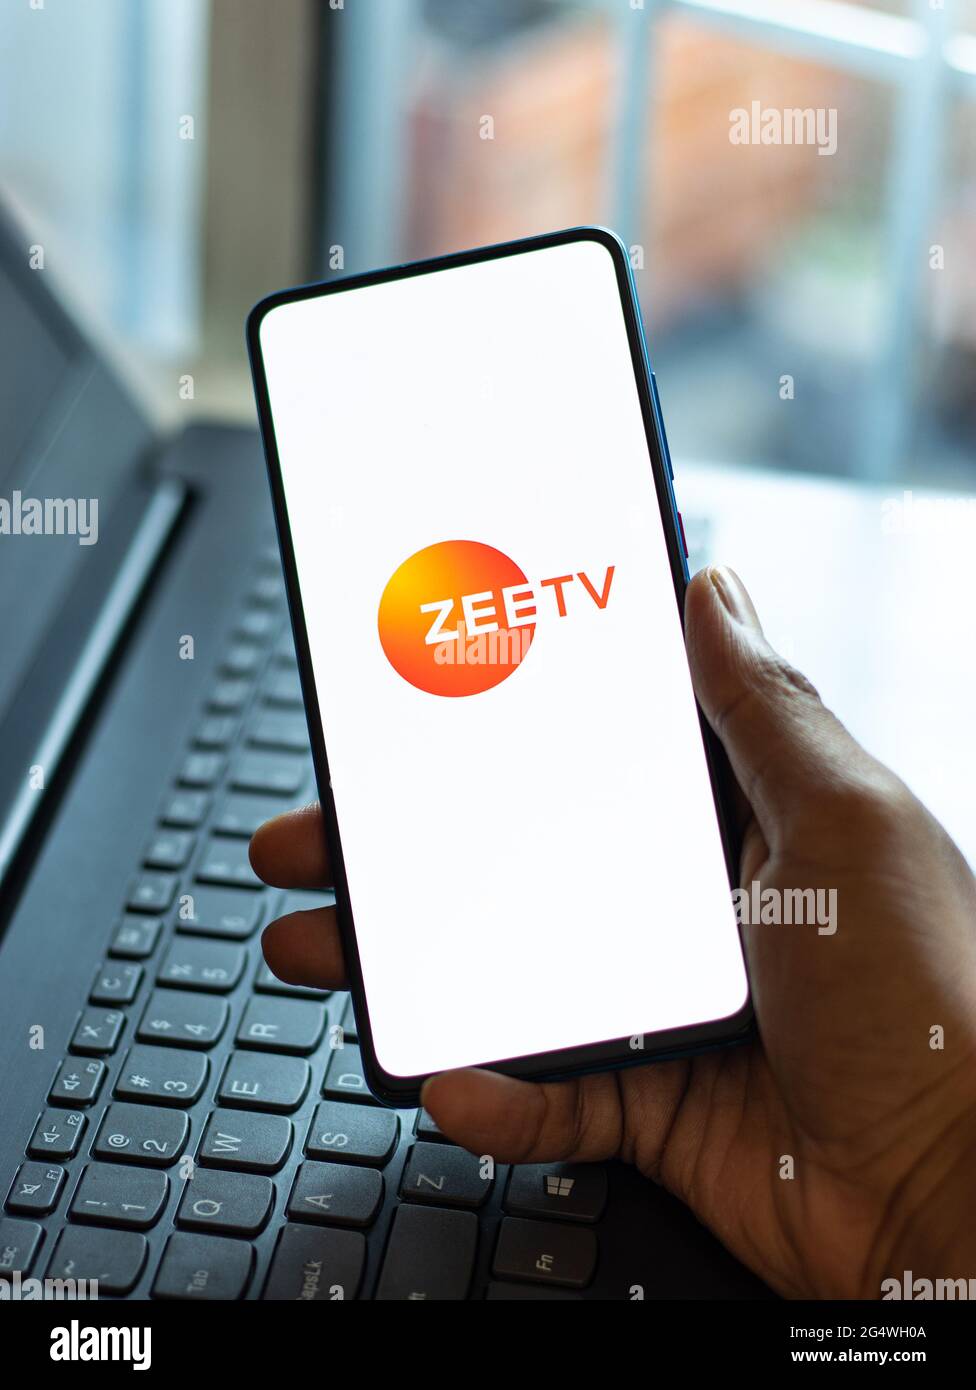 Zee TV logo on phone screen stock image. Stock Photo